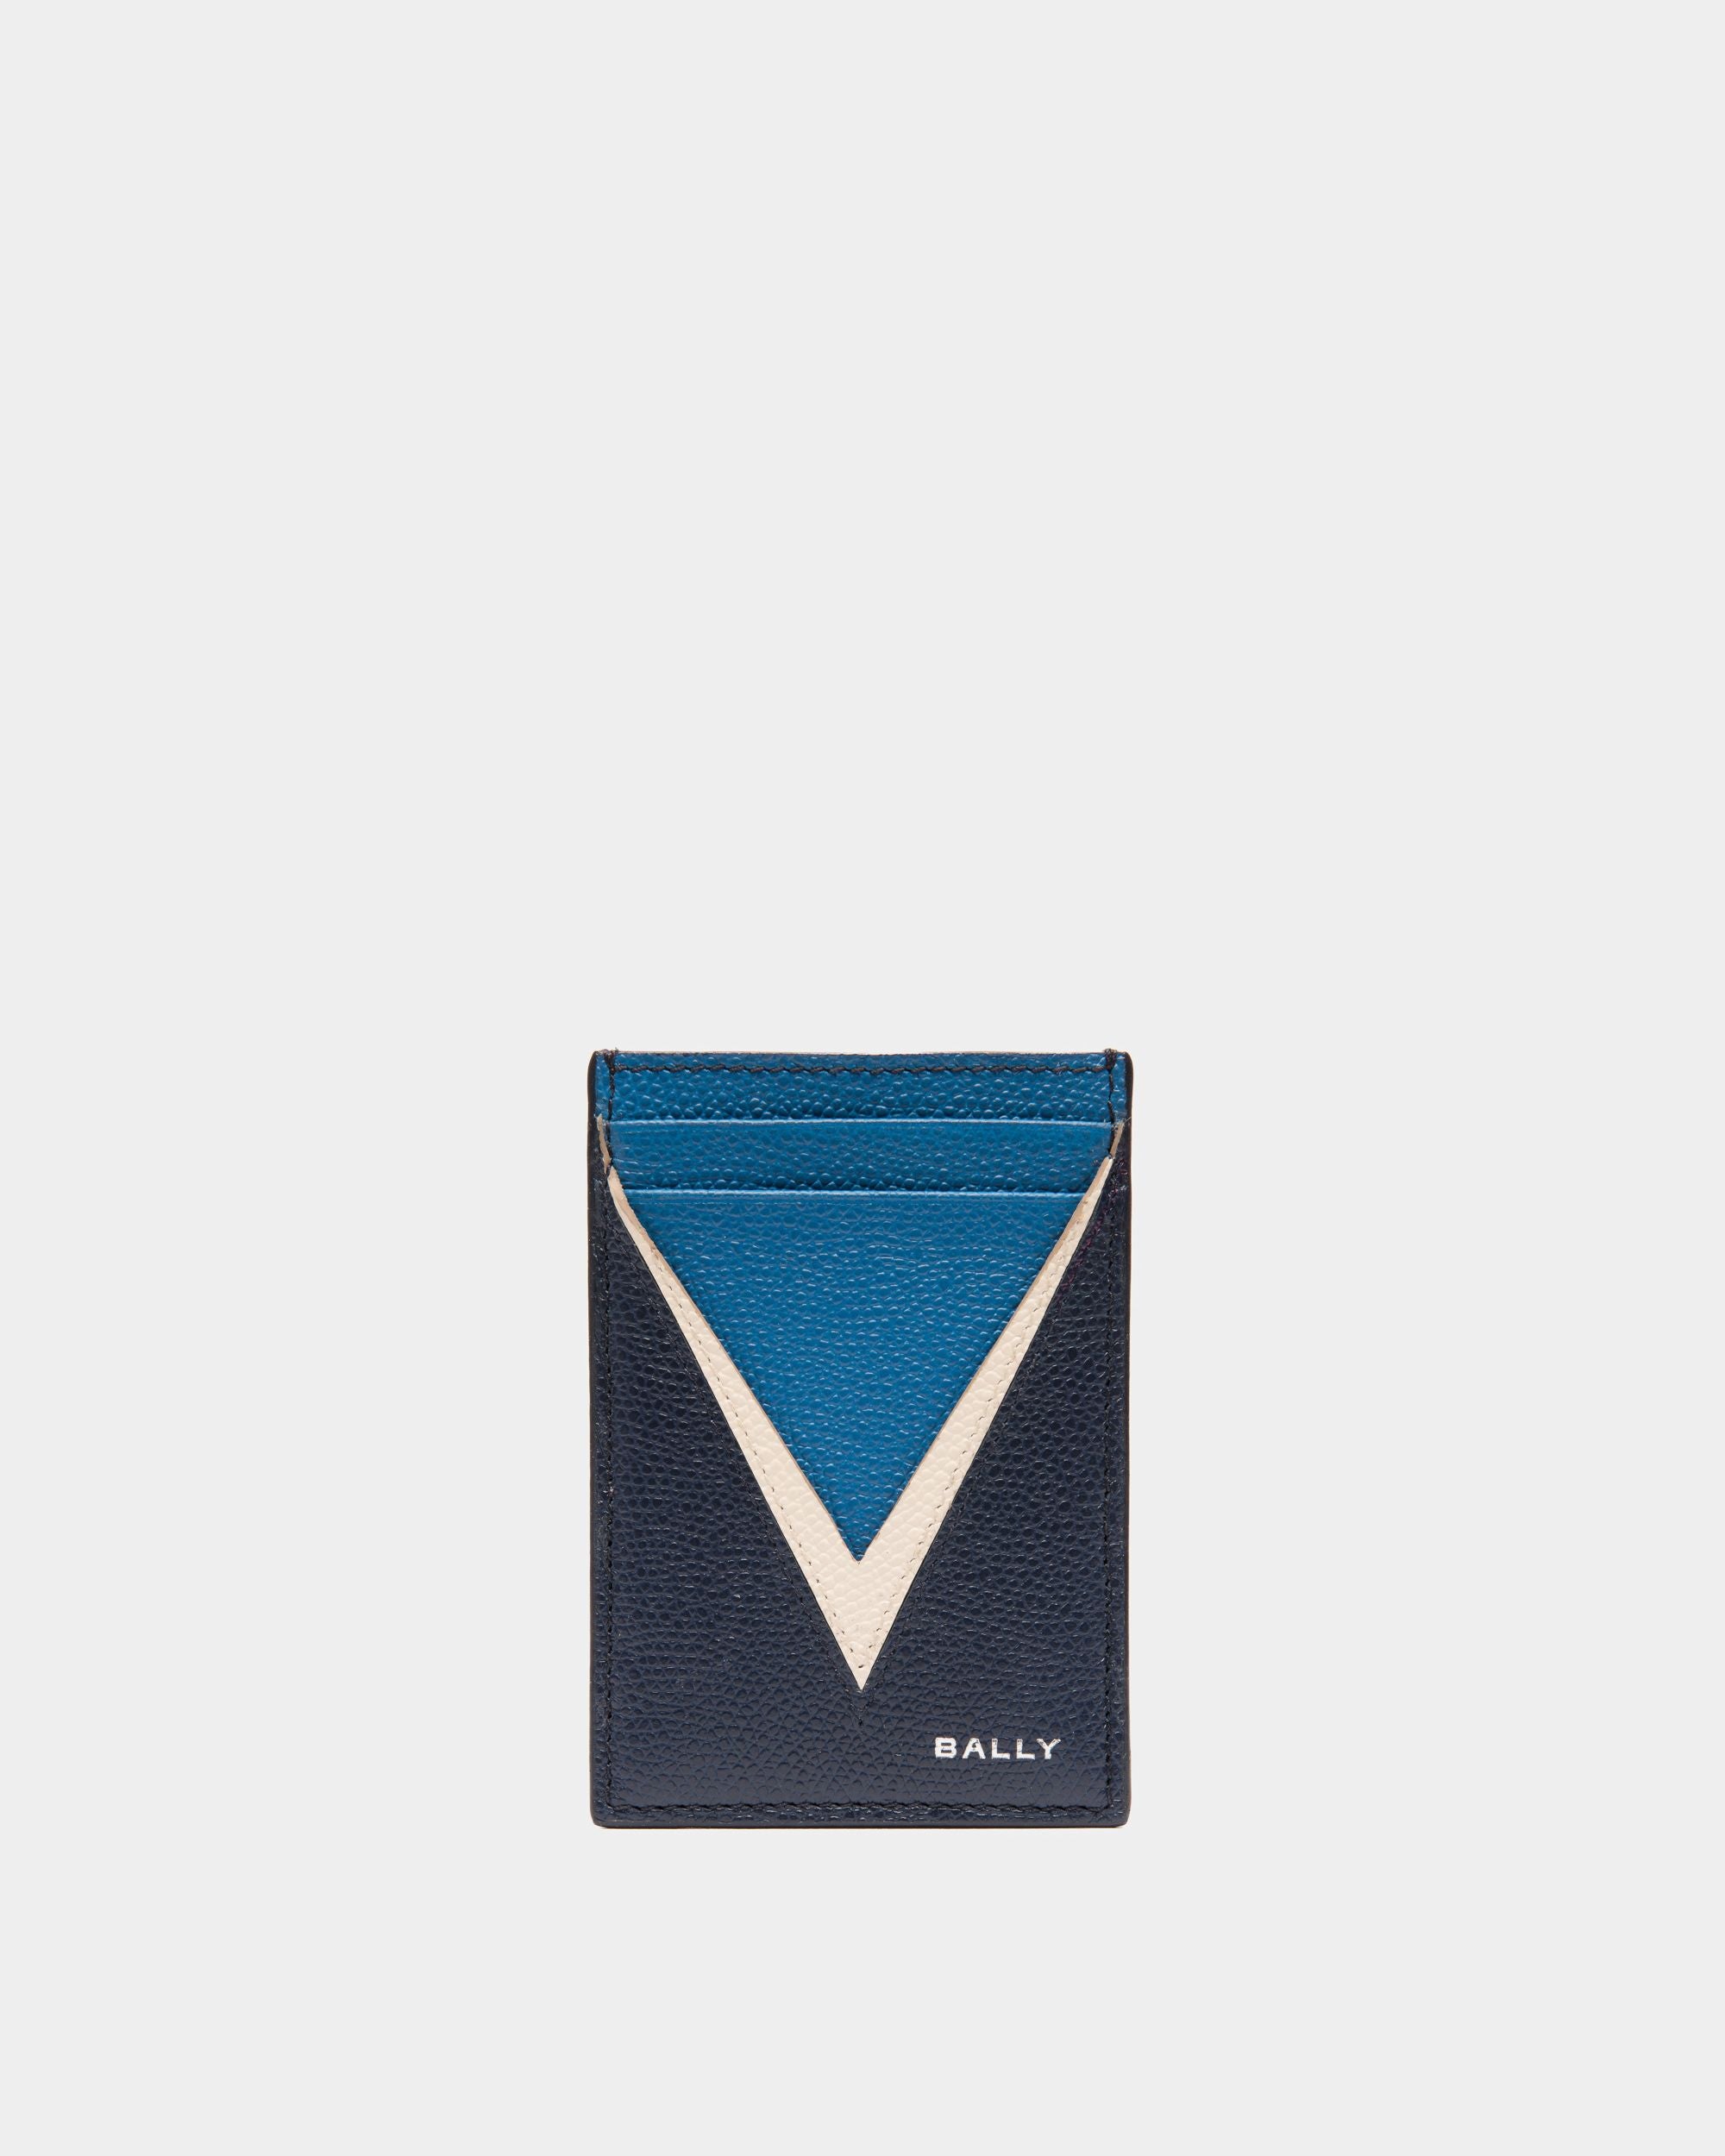 Flag | Men's Card Holder in Blue Leather | Bally | Still Life Front